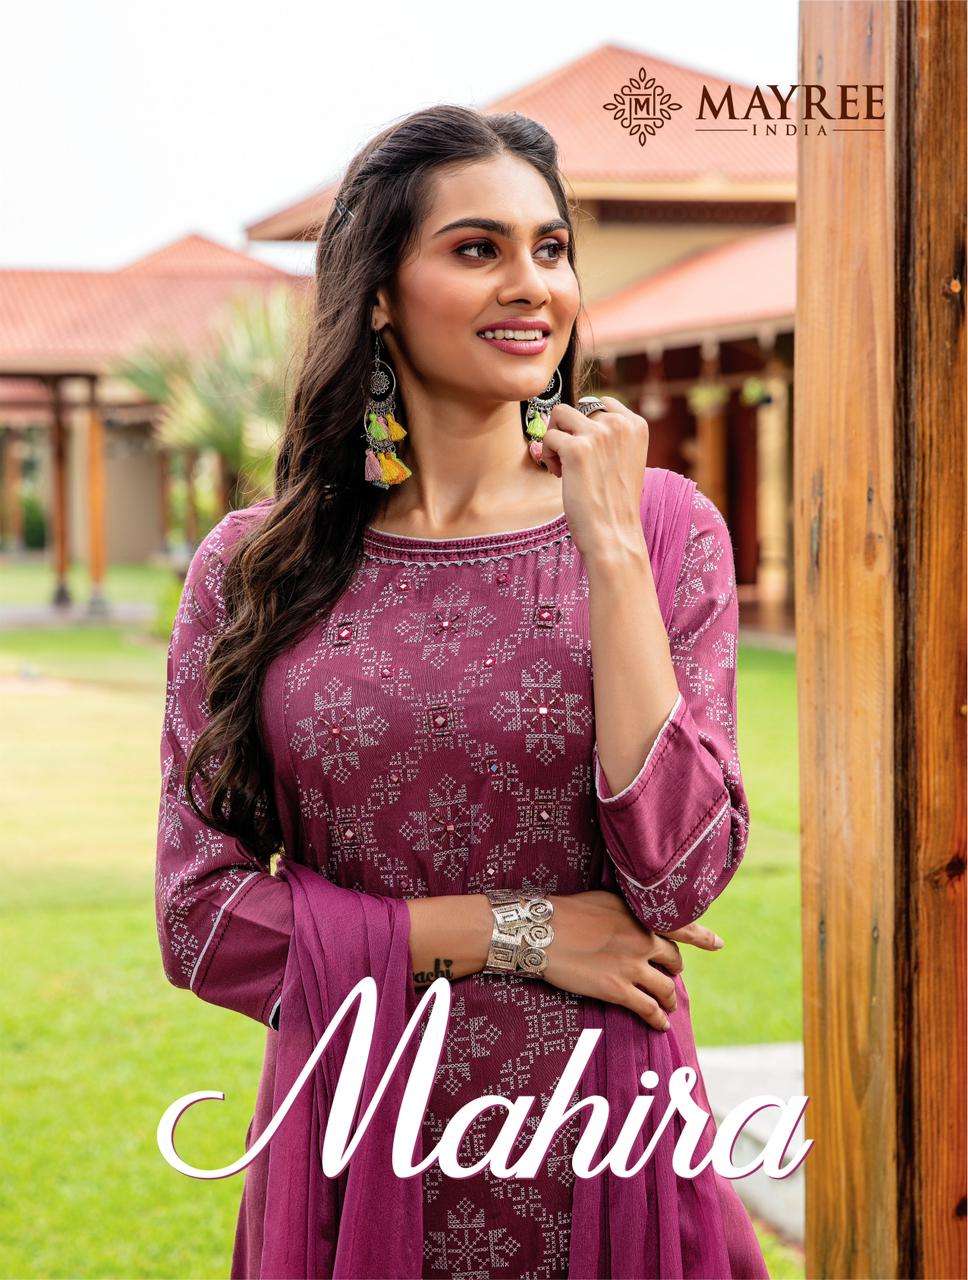 mayree india mahira vol 1 top with pant and dupatta set best price 